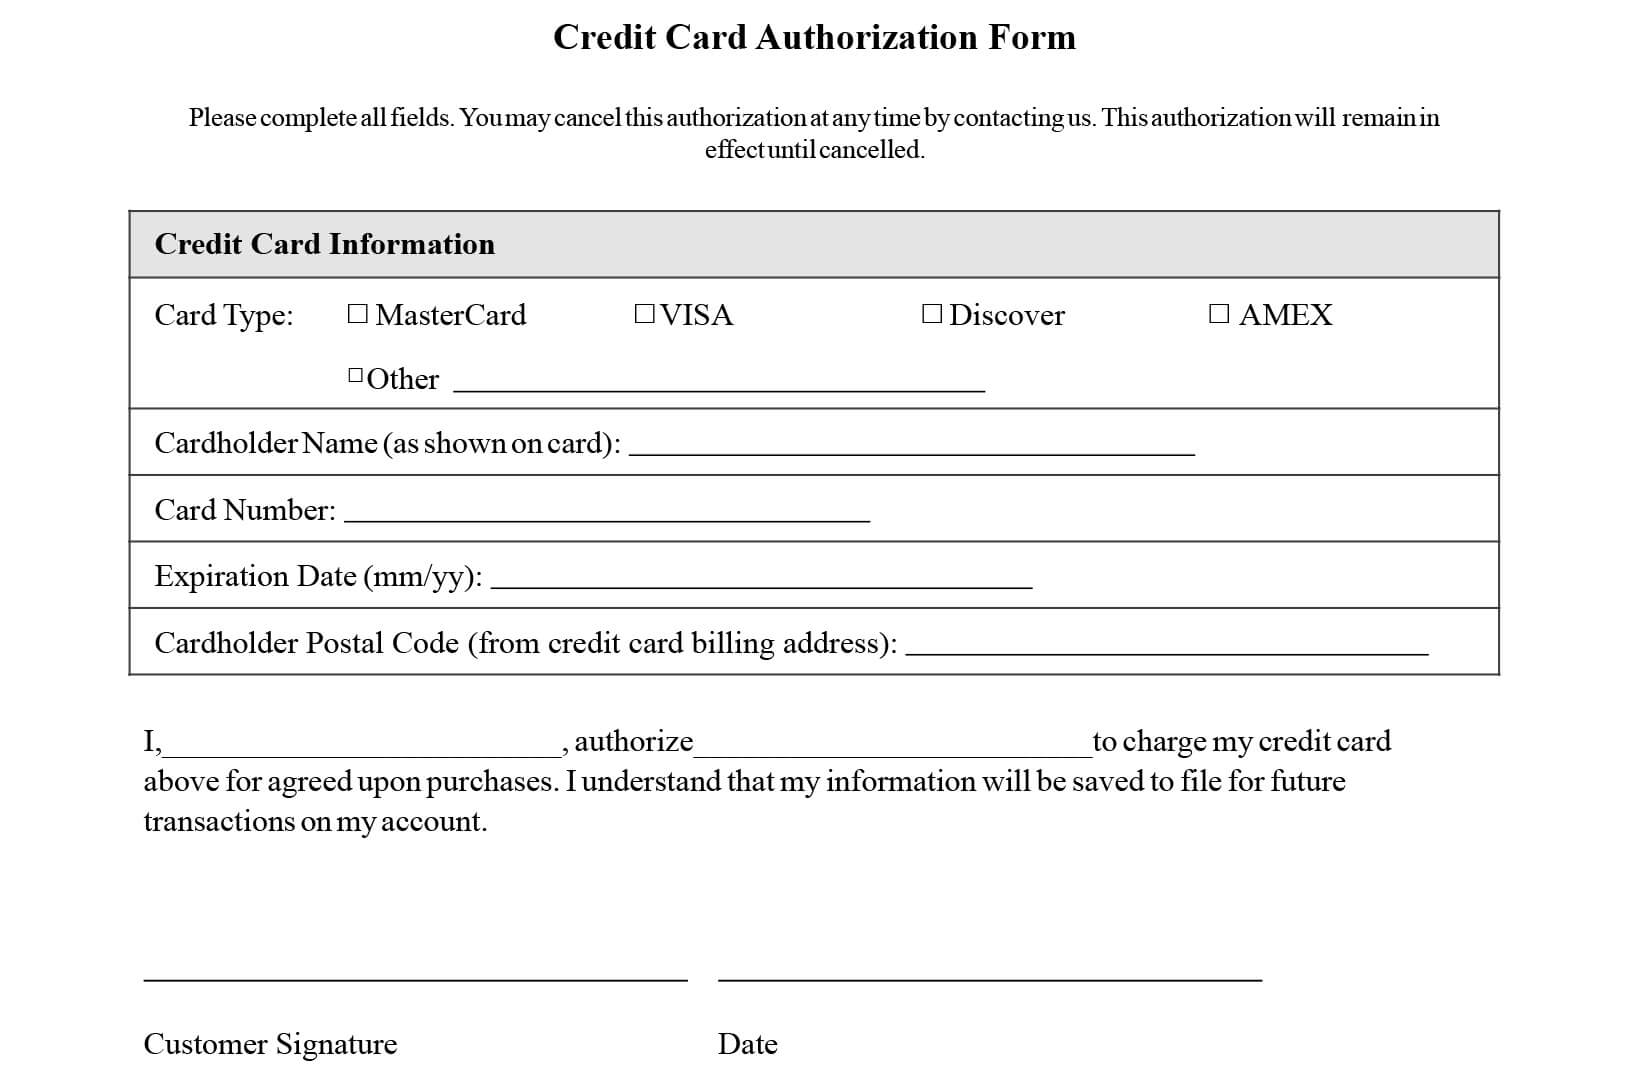 Credit Card Authorization Form Templates [Download] Regarding Credit Card Authorisation Form Template Australia